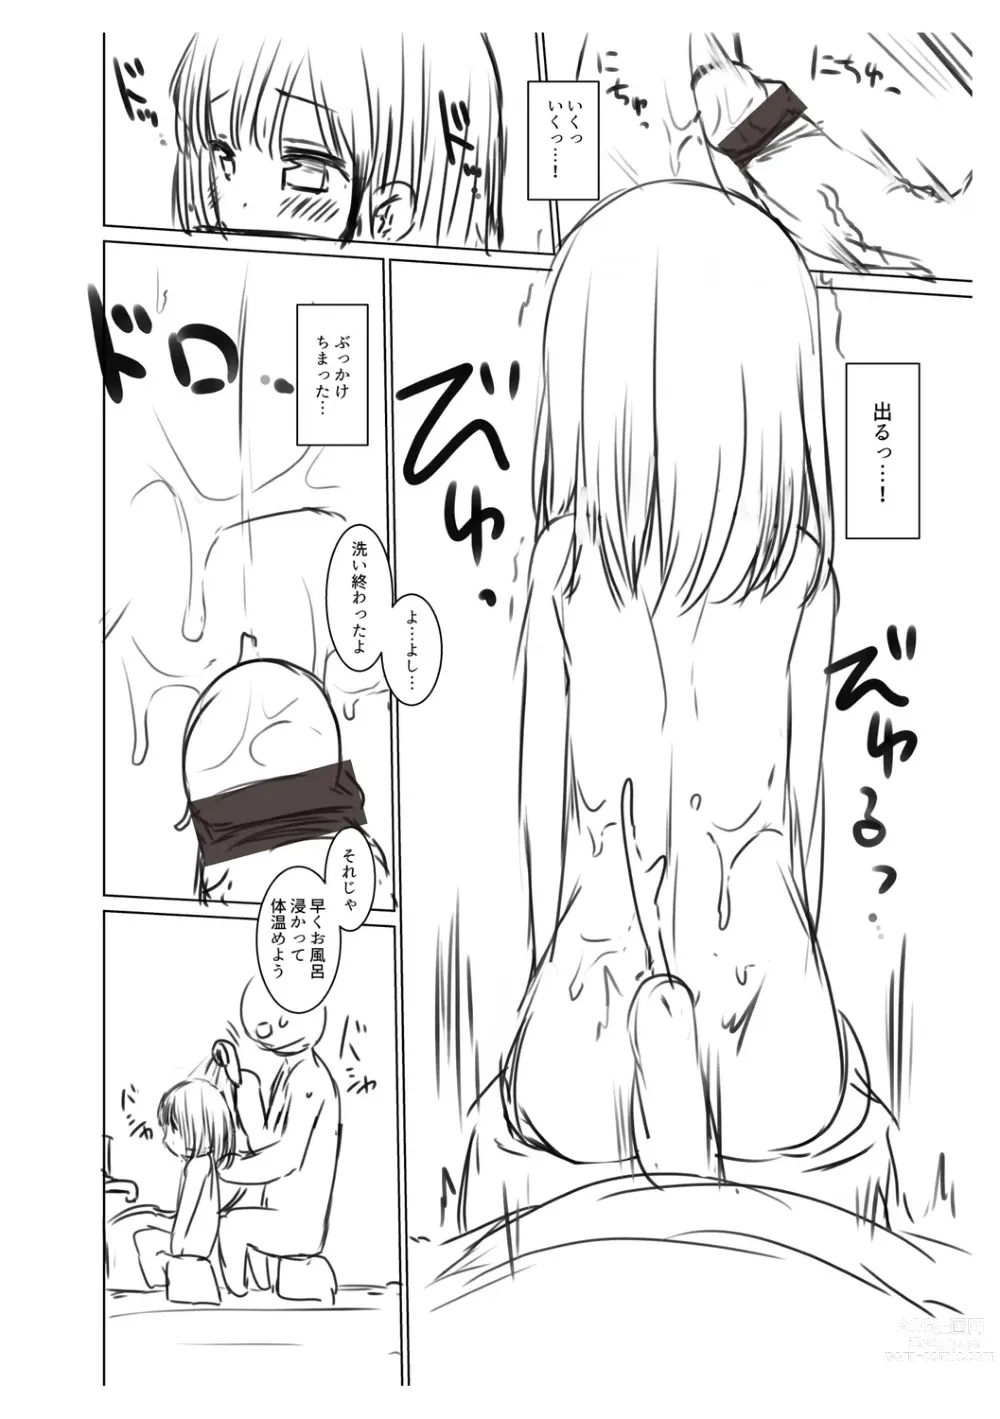 Page 204 of manga Akuma mitai ni kimi wa tatteta